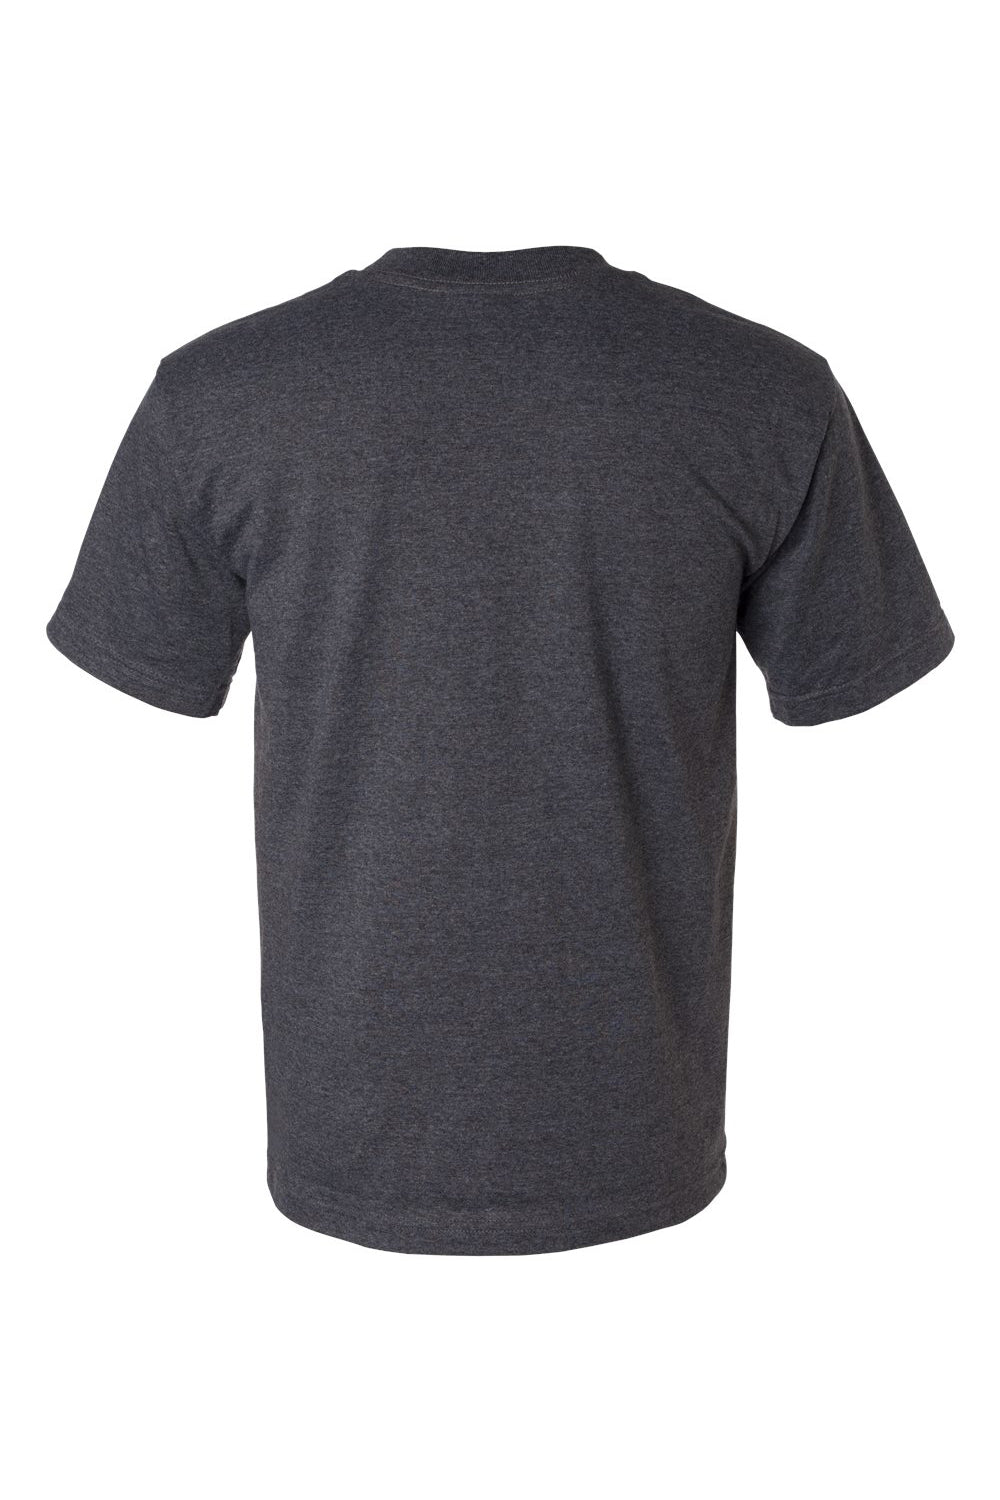 Bayside 1701 Mens USA Made Short Sleeve Crewneck T-Shirt Heather Charcoal Grey Flat Back